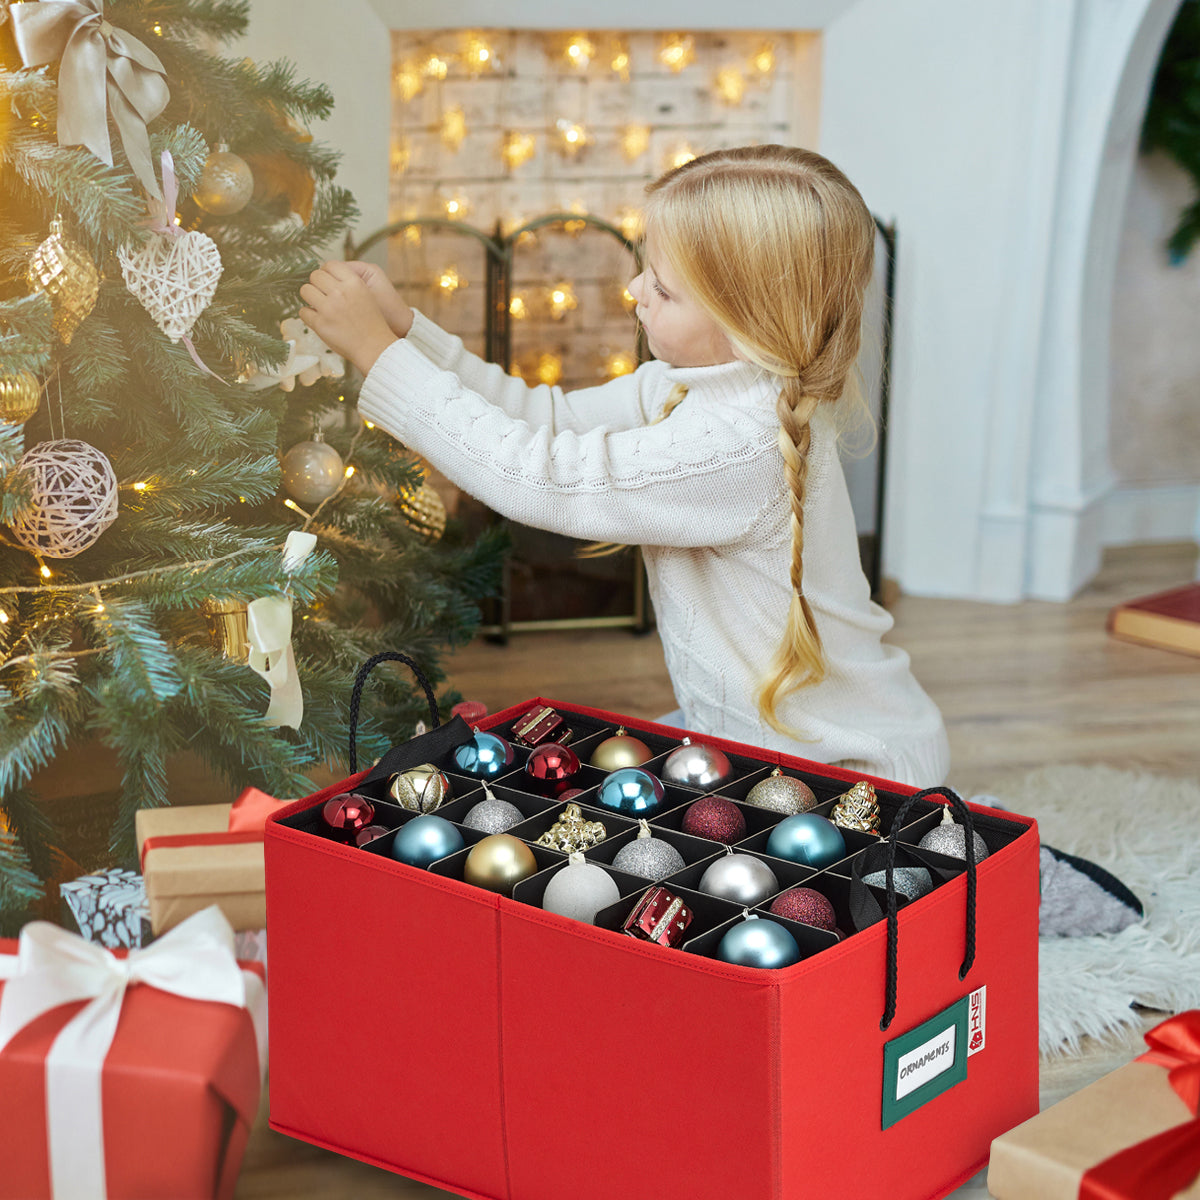 Christmas Ornament Storage Container Box – Heavy Duty, Premium Quality Non-Woven Storage Bins.